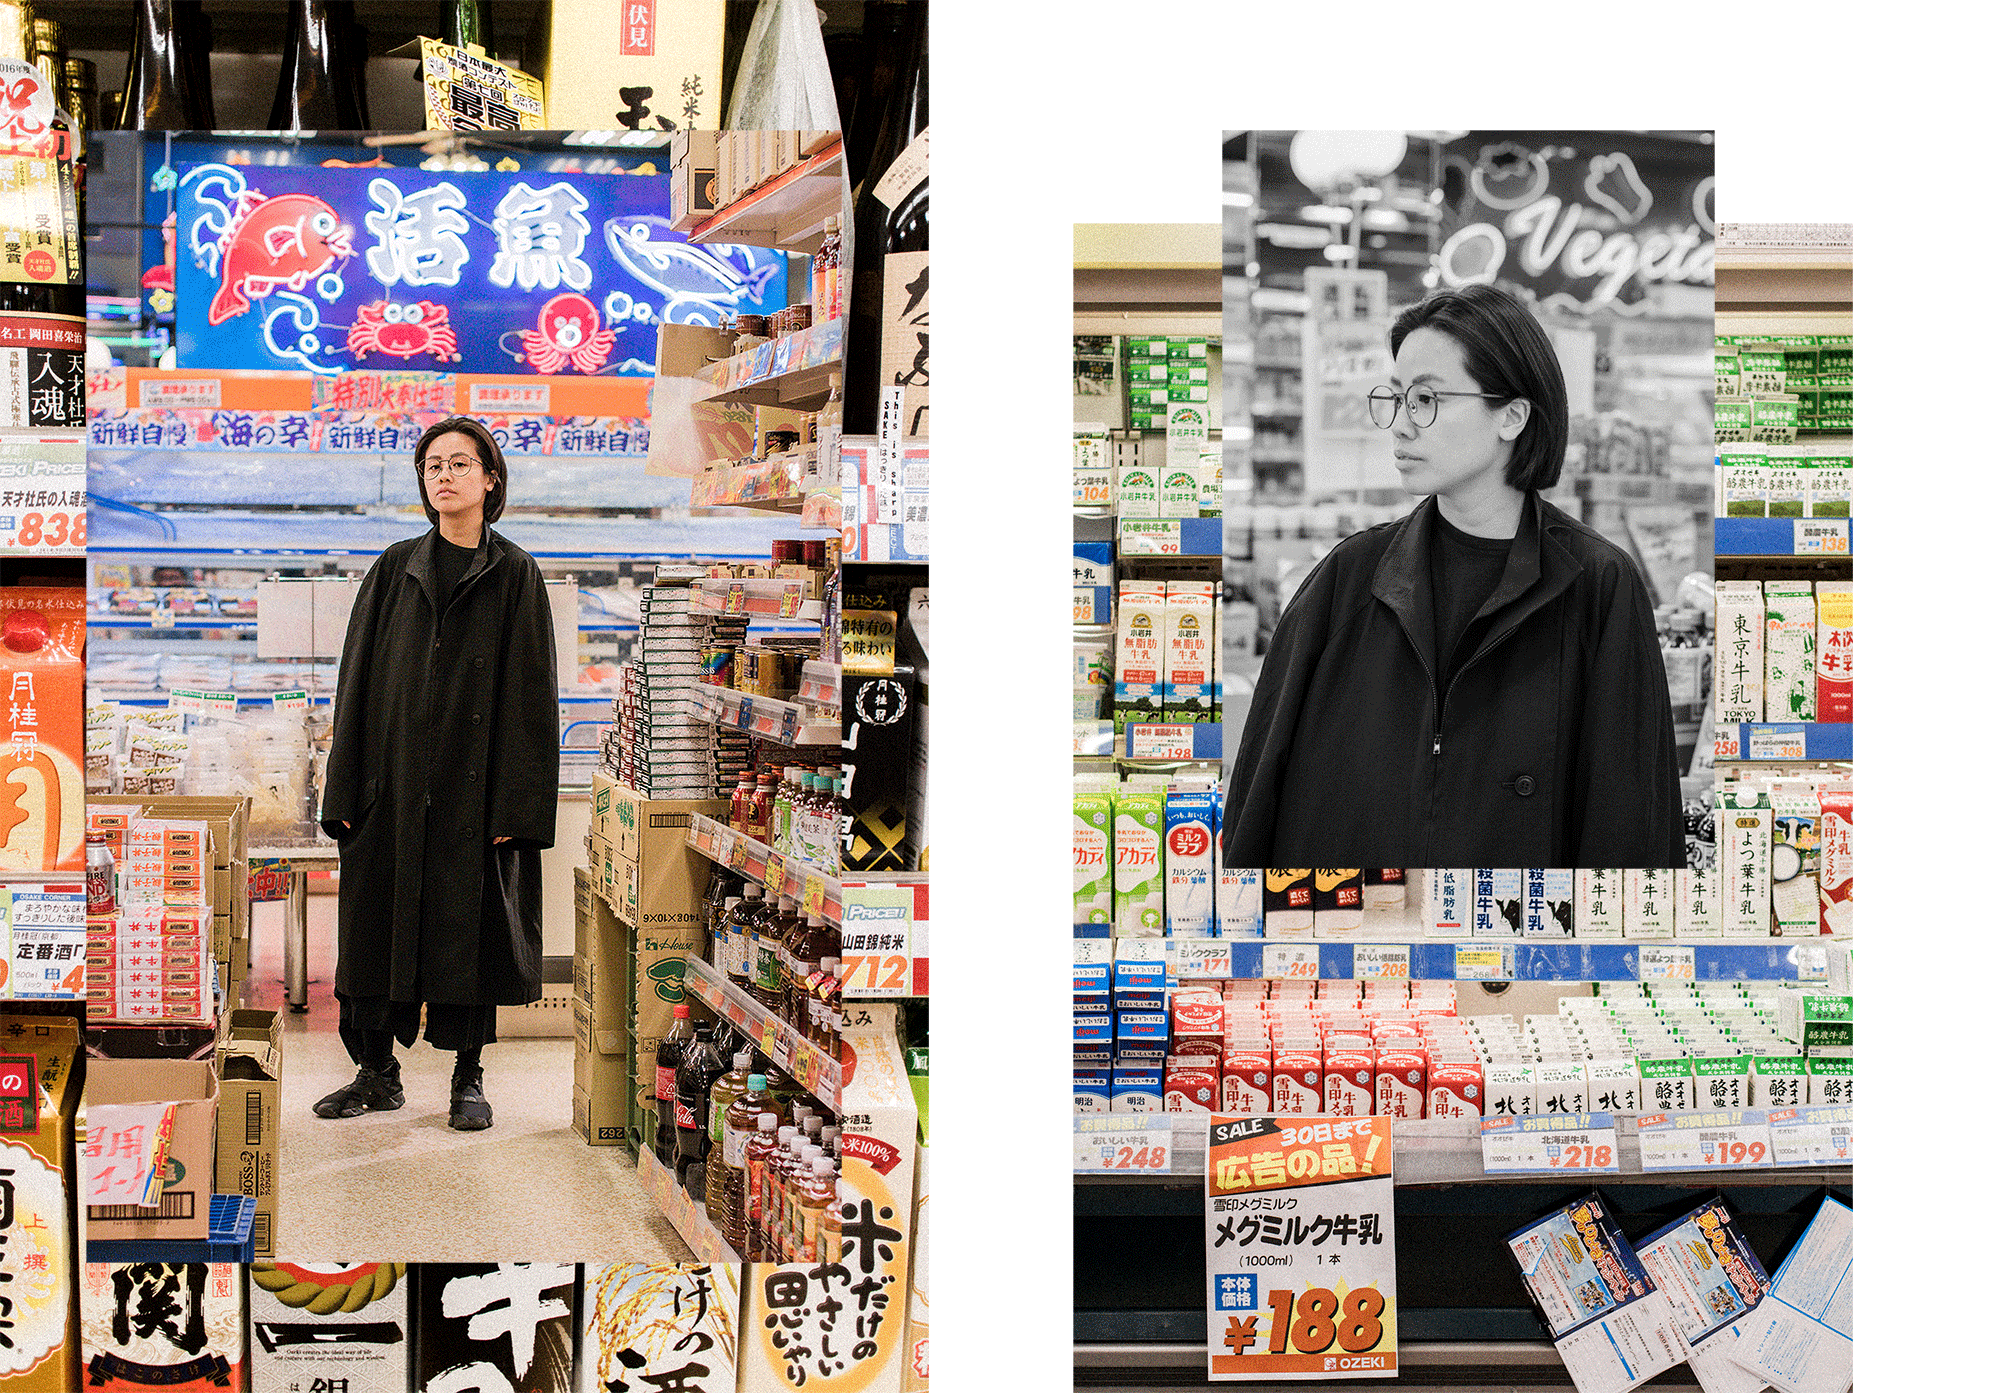 Japanese Supermarket: Yohji Yamamoto Cat, Y3 Kohna Sneakers / All Black Everything by IheartAlice.com